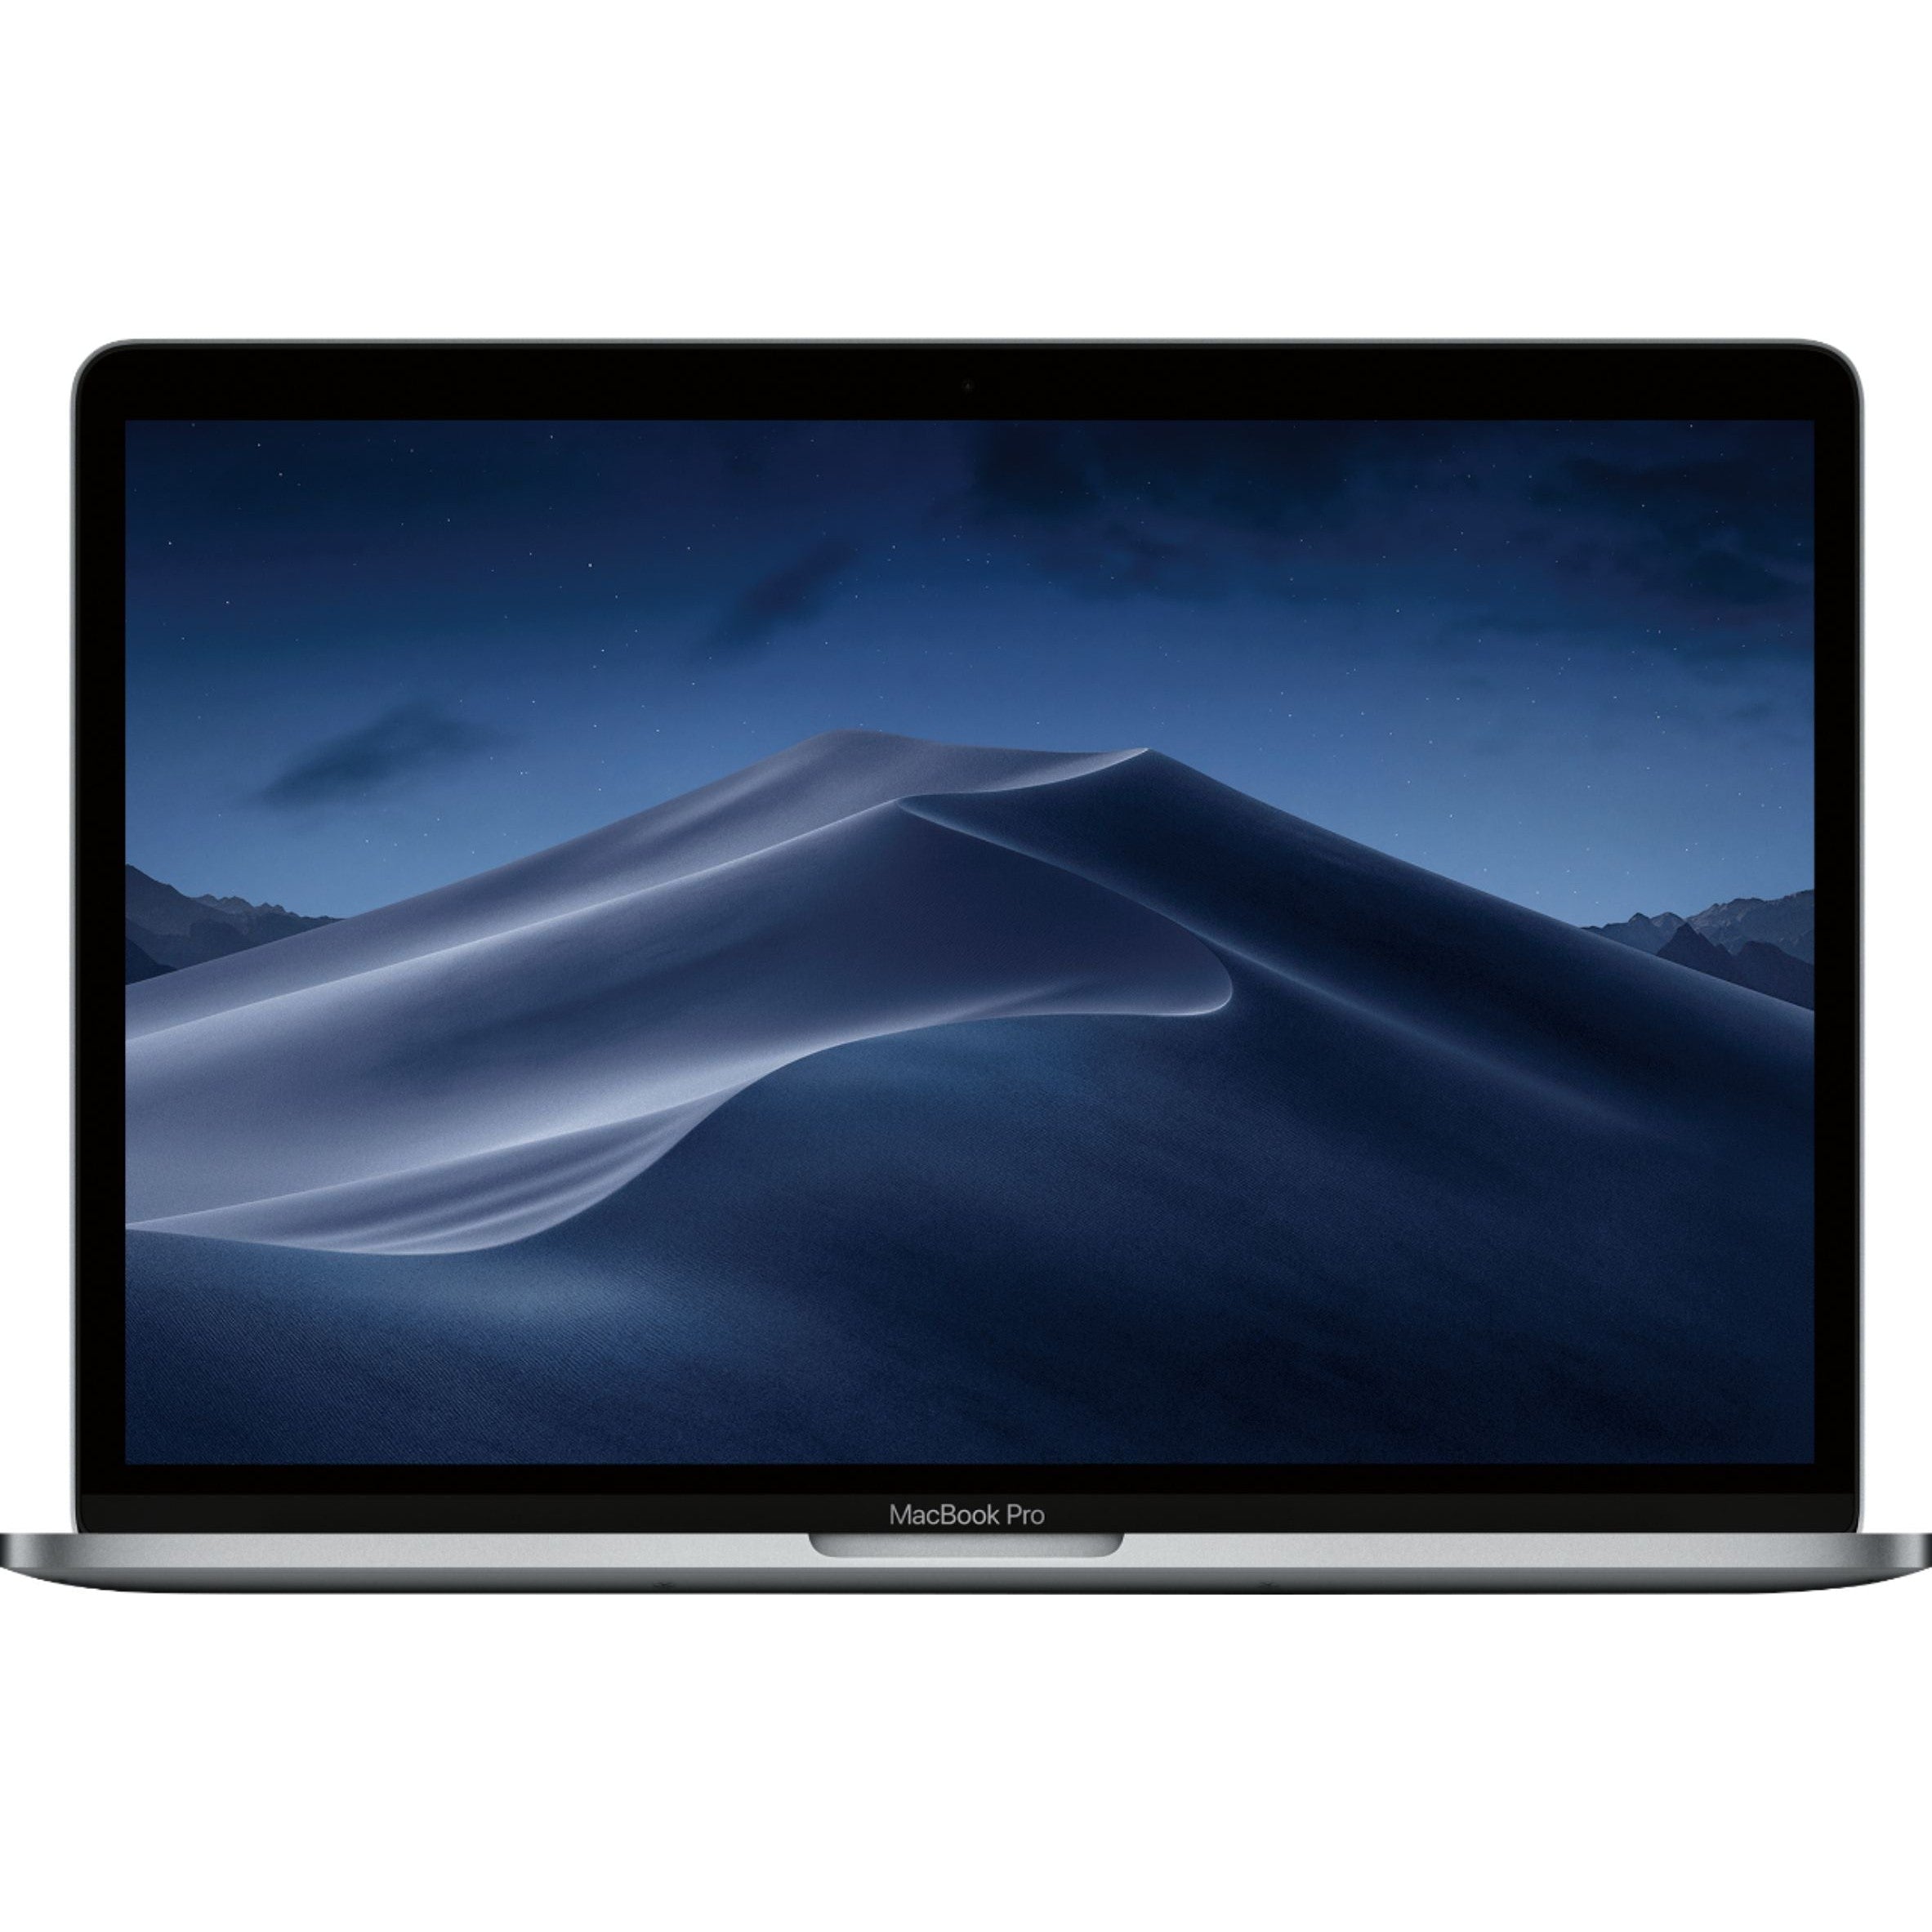 Apple MacBook Pro 15' MR942LL/A (2020) Laptop, Intel Core i7, 16GB RAM, 512GB SSD, Space Grey